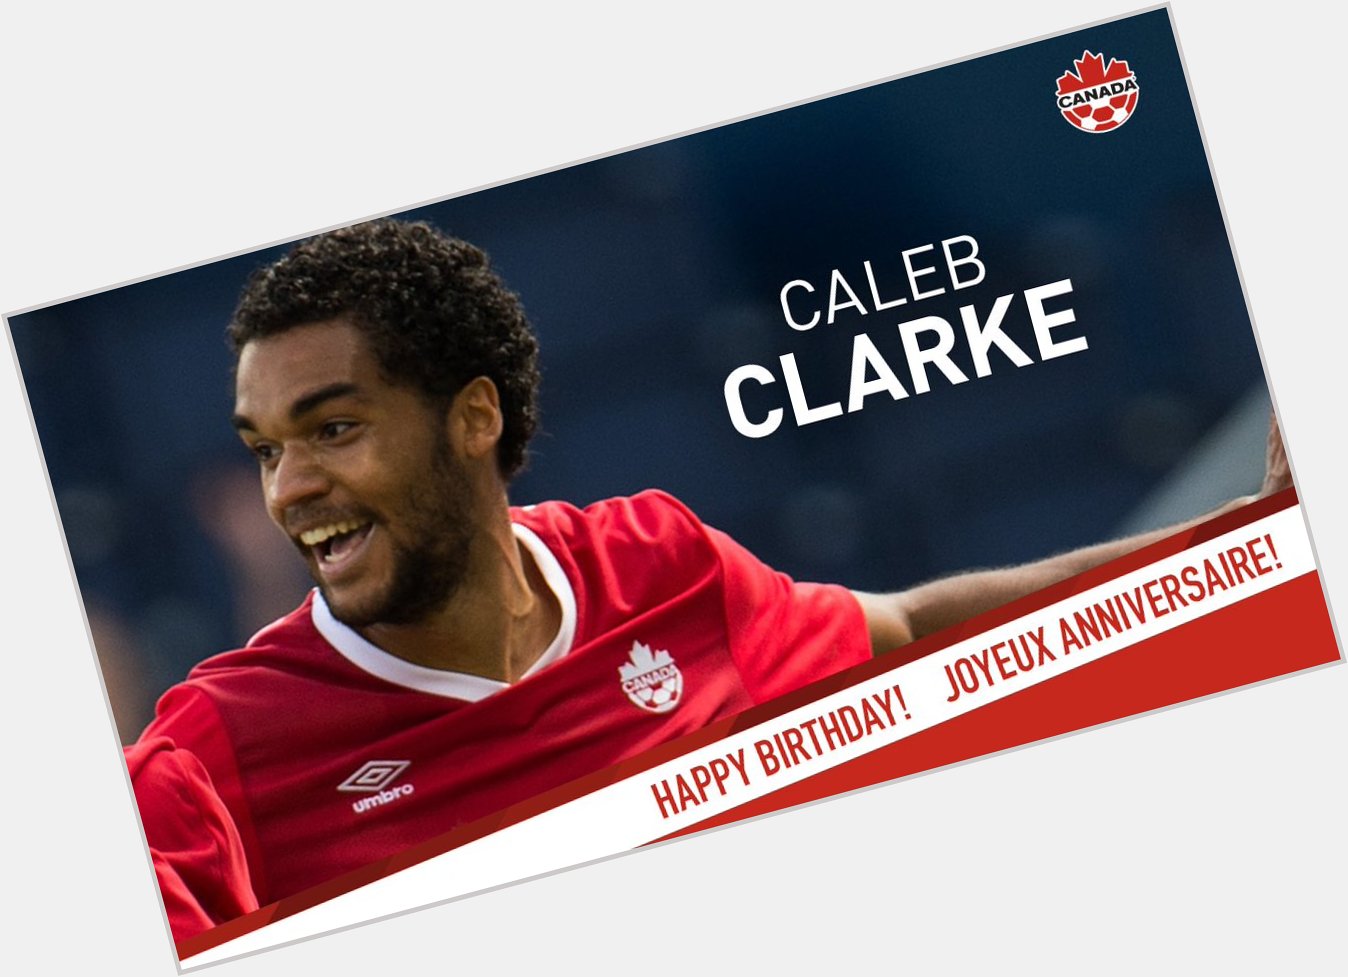 Happy birthday to Caleb Clarke! 